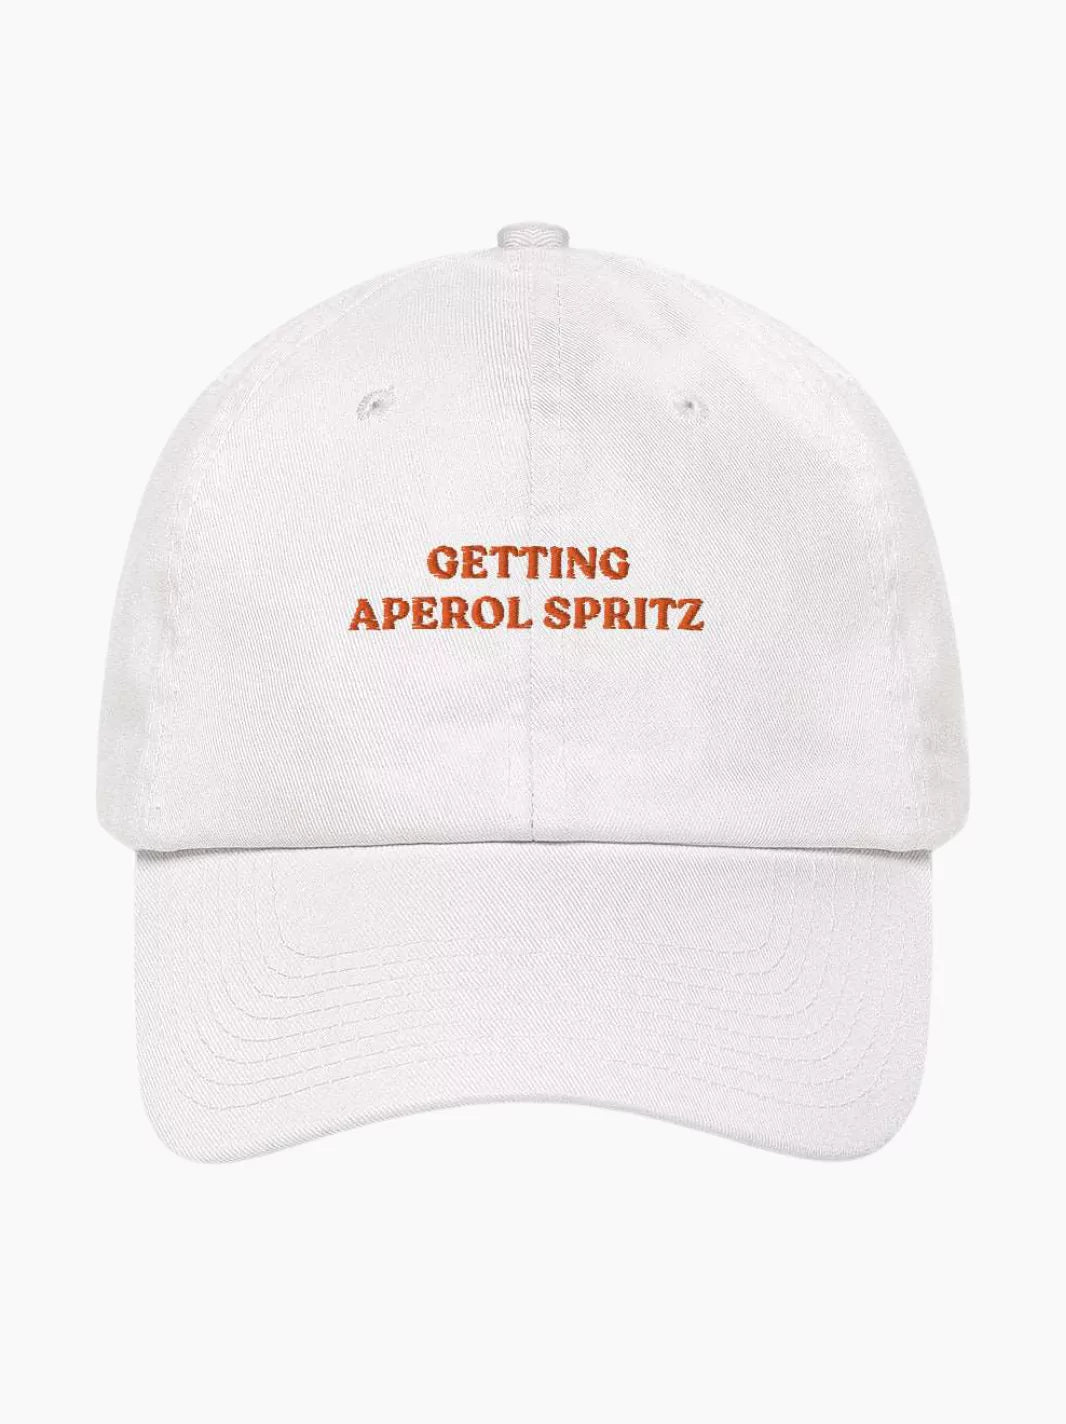 Getting Aperol Spritz Cap